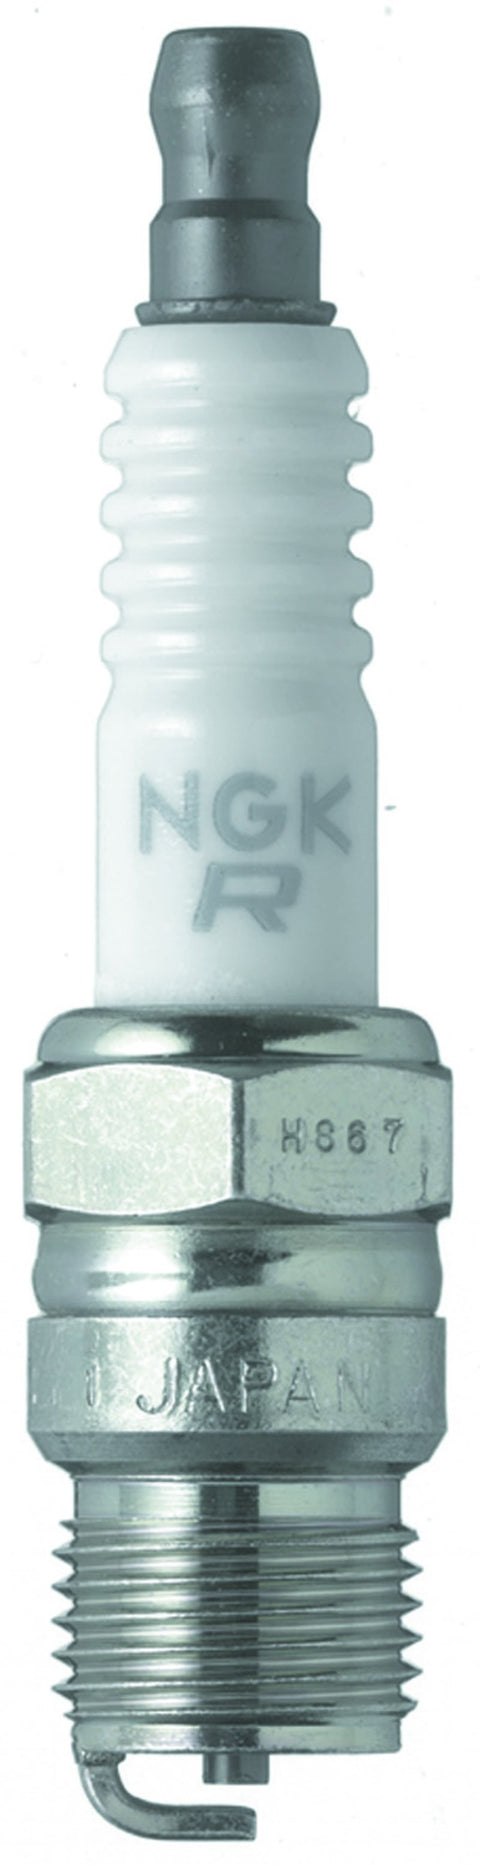 NGK Standard Spark Plug (4323-1)